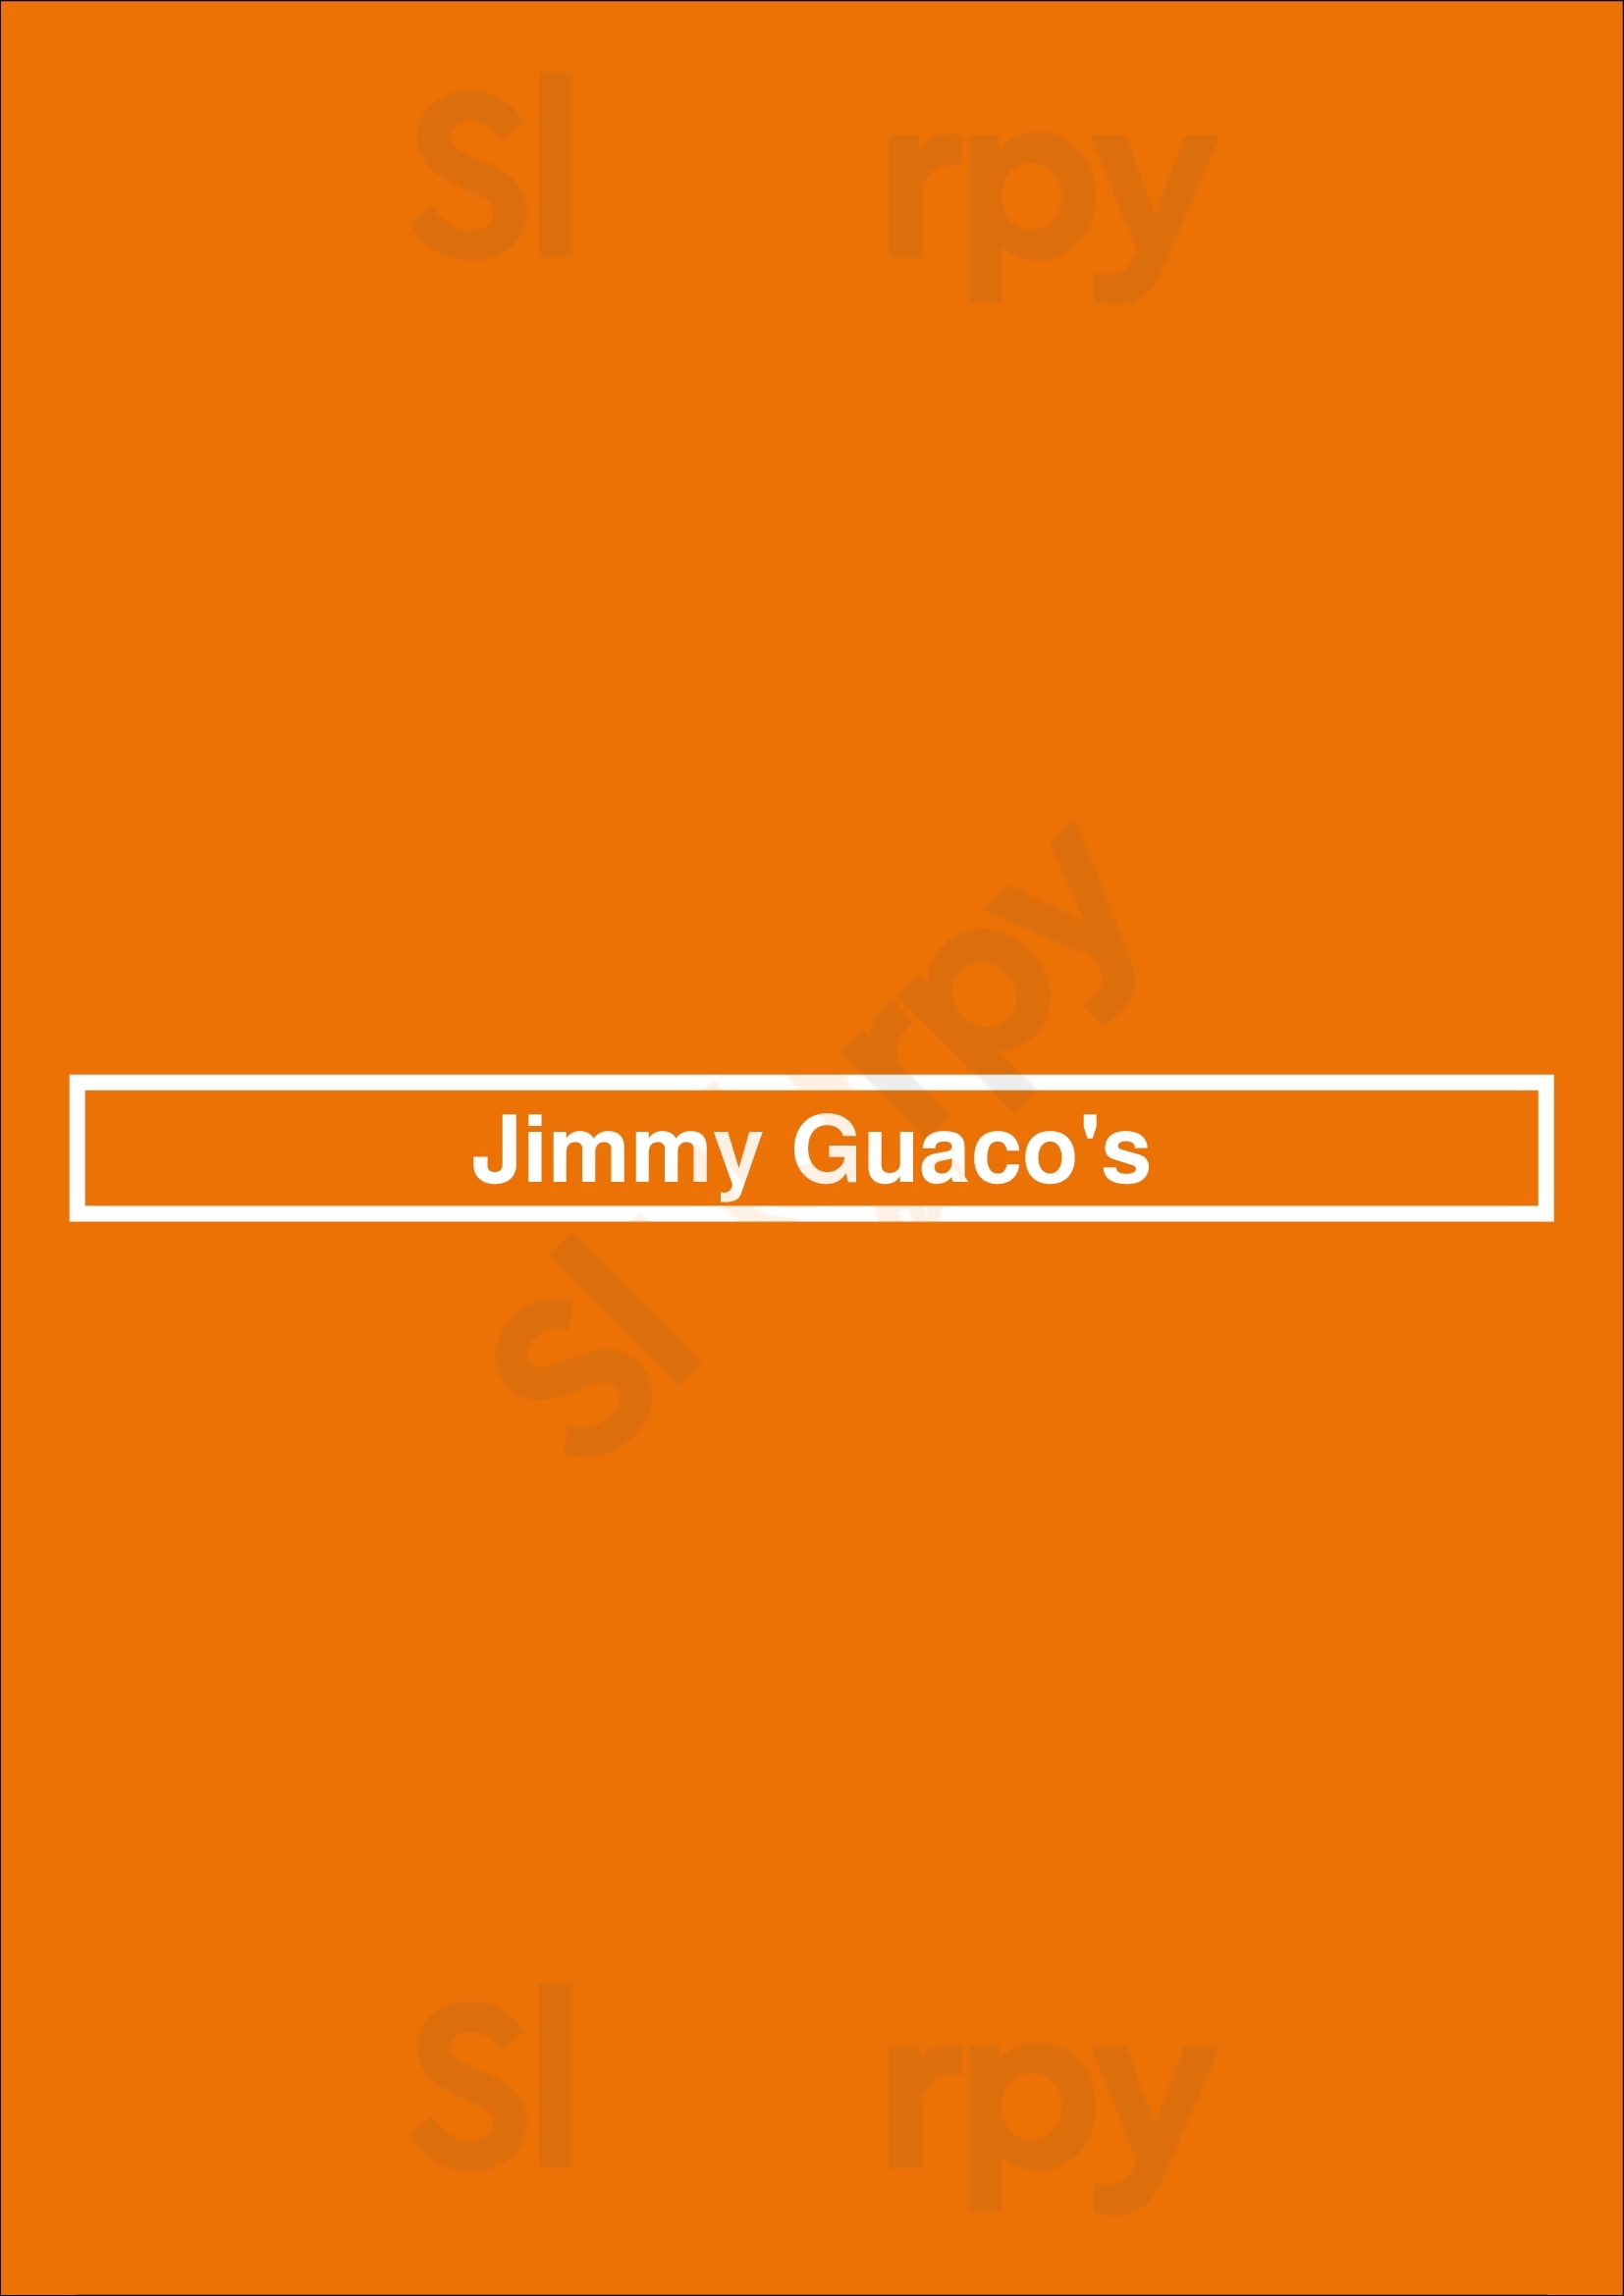 Jimmy Guaco's Peterborough Menu - 1